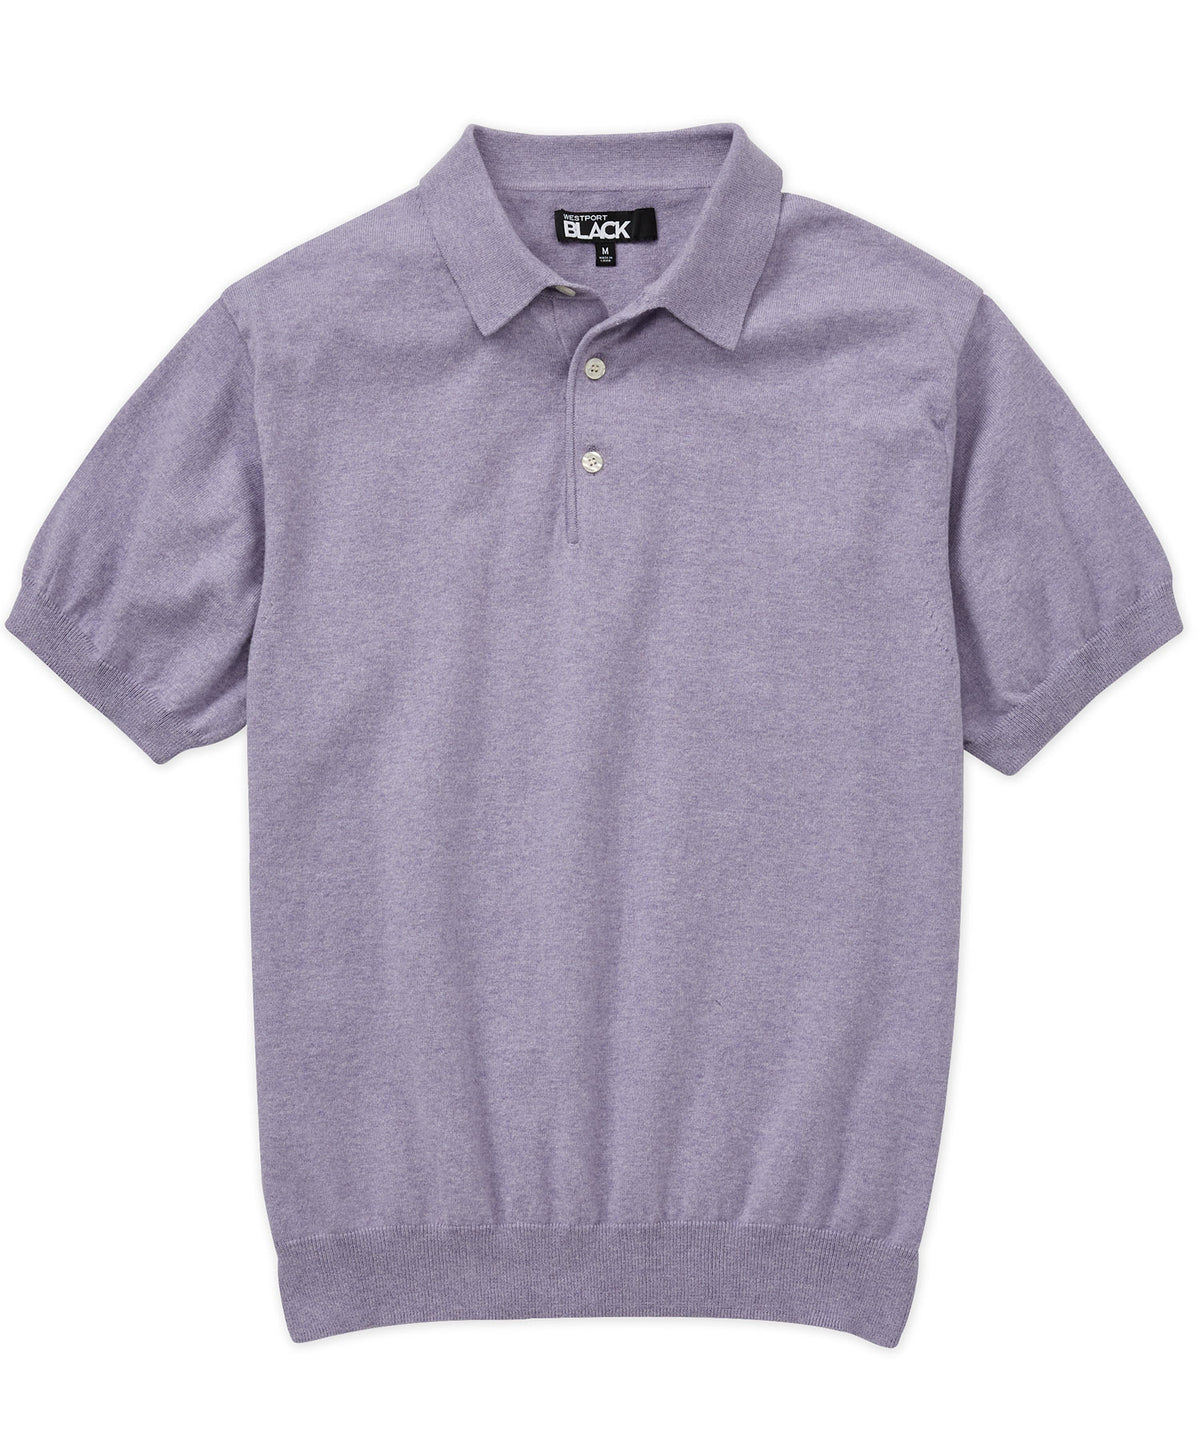 Westport Black Short Sleeve Cotton Cashmere Polo Knit Shirt, Men's Big & Tall